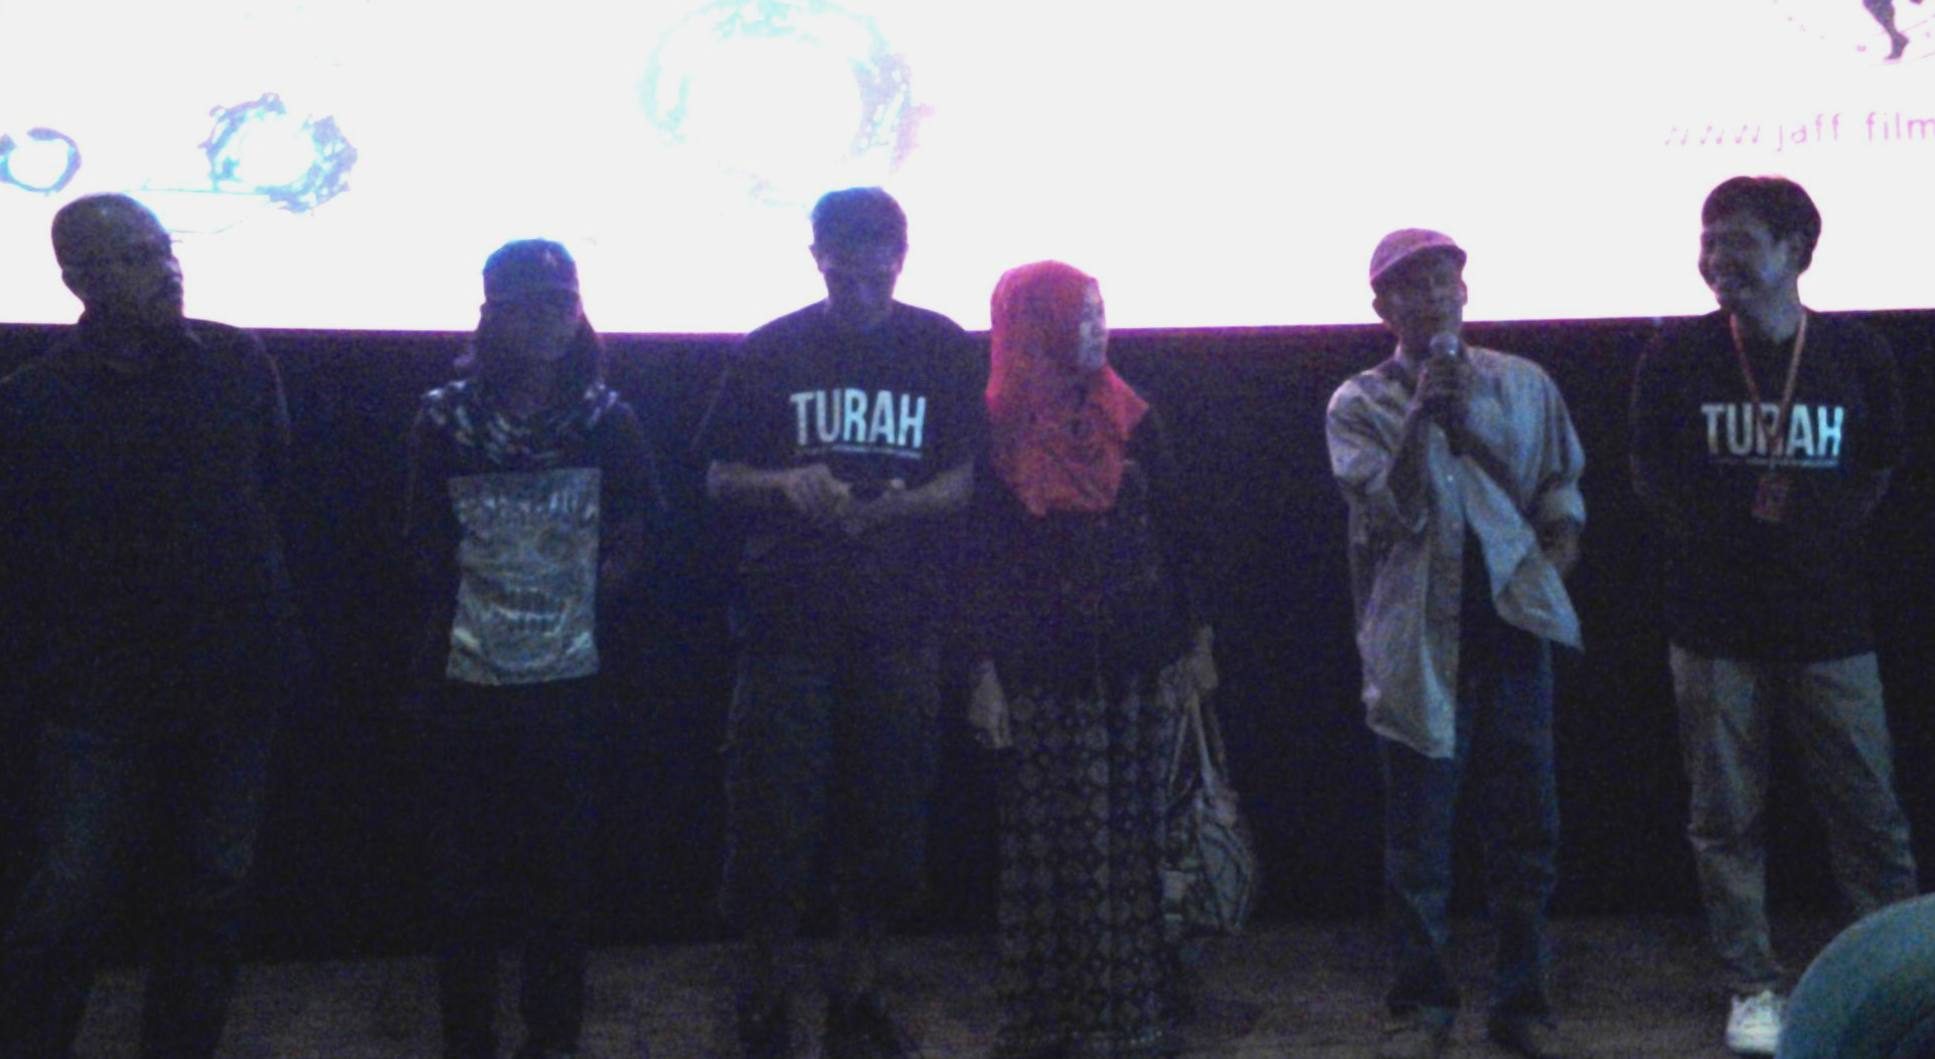 Pemeran dan sutradara film 'Turah' di sesi tanya jawab usai pemutaran film 'Turah' di ajang 'JAFF 2016' di Empire XXI, Yogyakarta, Selasa, 29 November. Foto oleh Dyah A. Pitaloka/Rappler.com. 